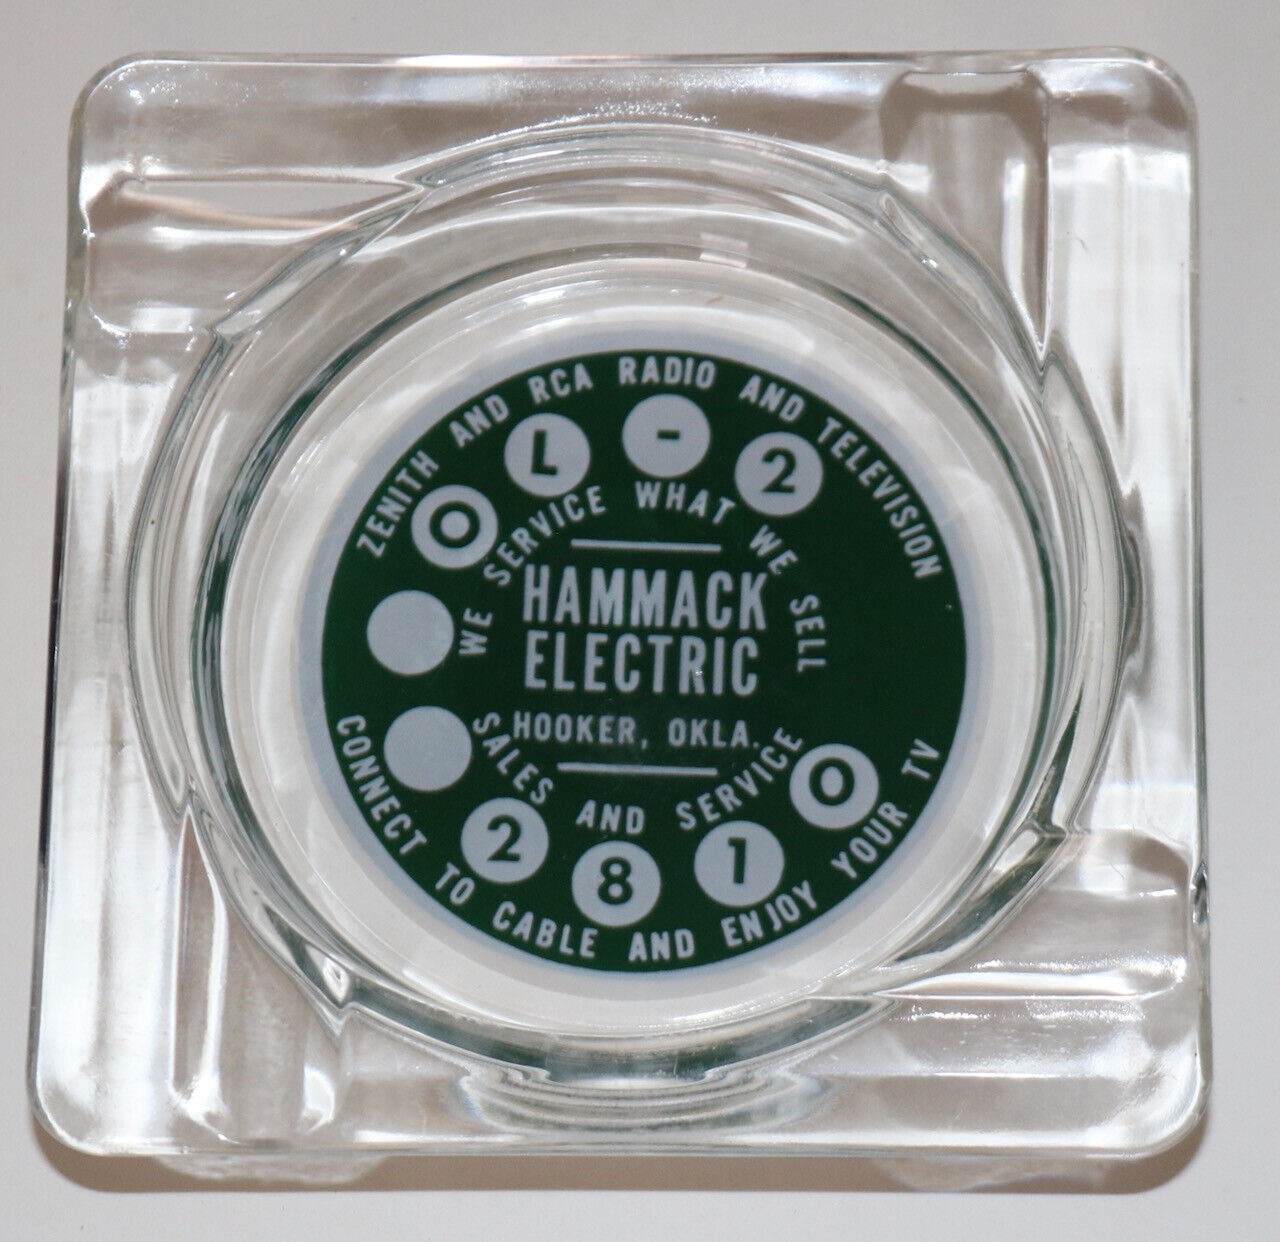 HAMMACK ELECTRIC Oklahoma vintage glass advertising ashtray